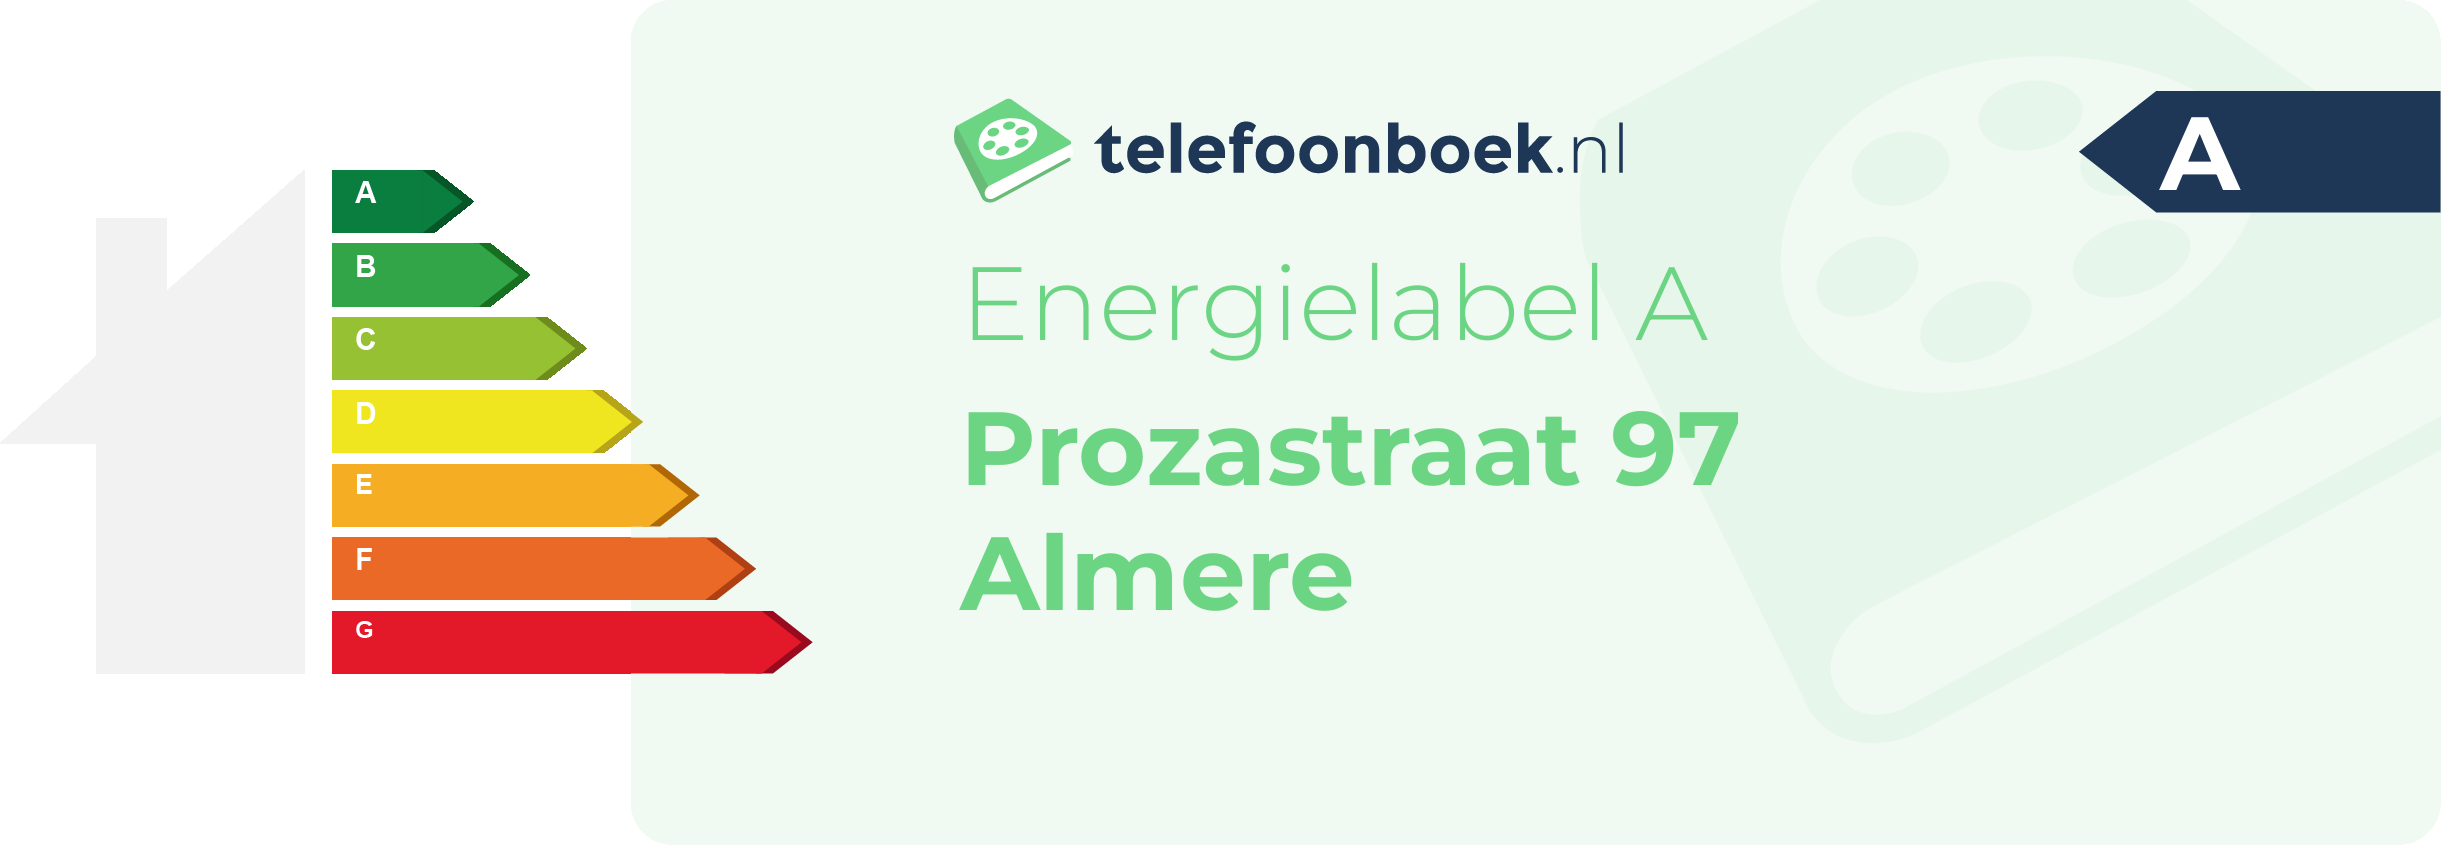 Energielabel Prozastraat 97 Almere